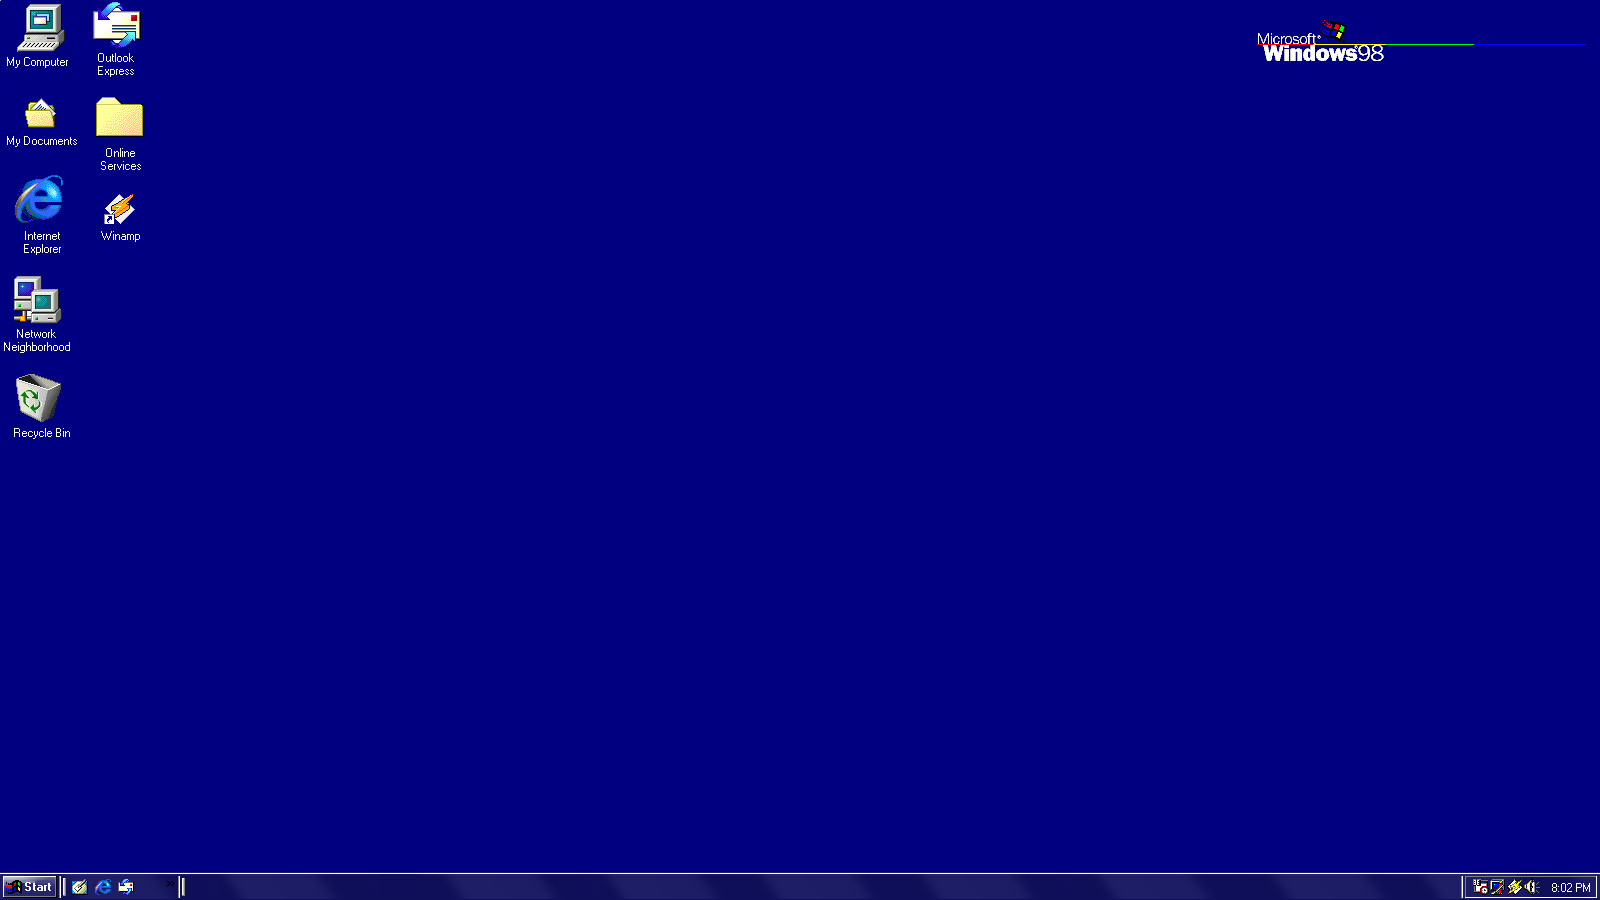 Windows 98 Wallpaper Windows 98 hd by cecil475